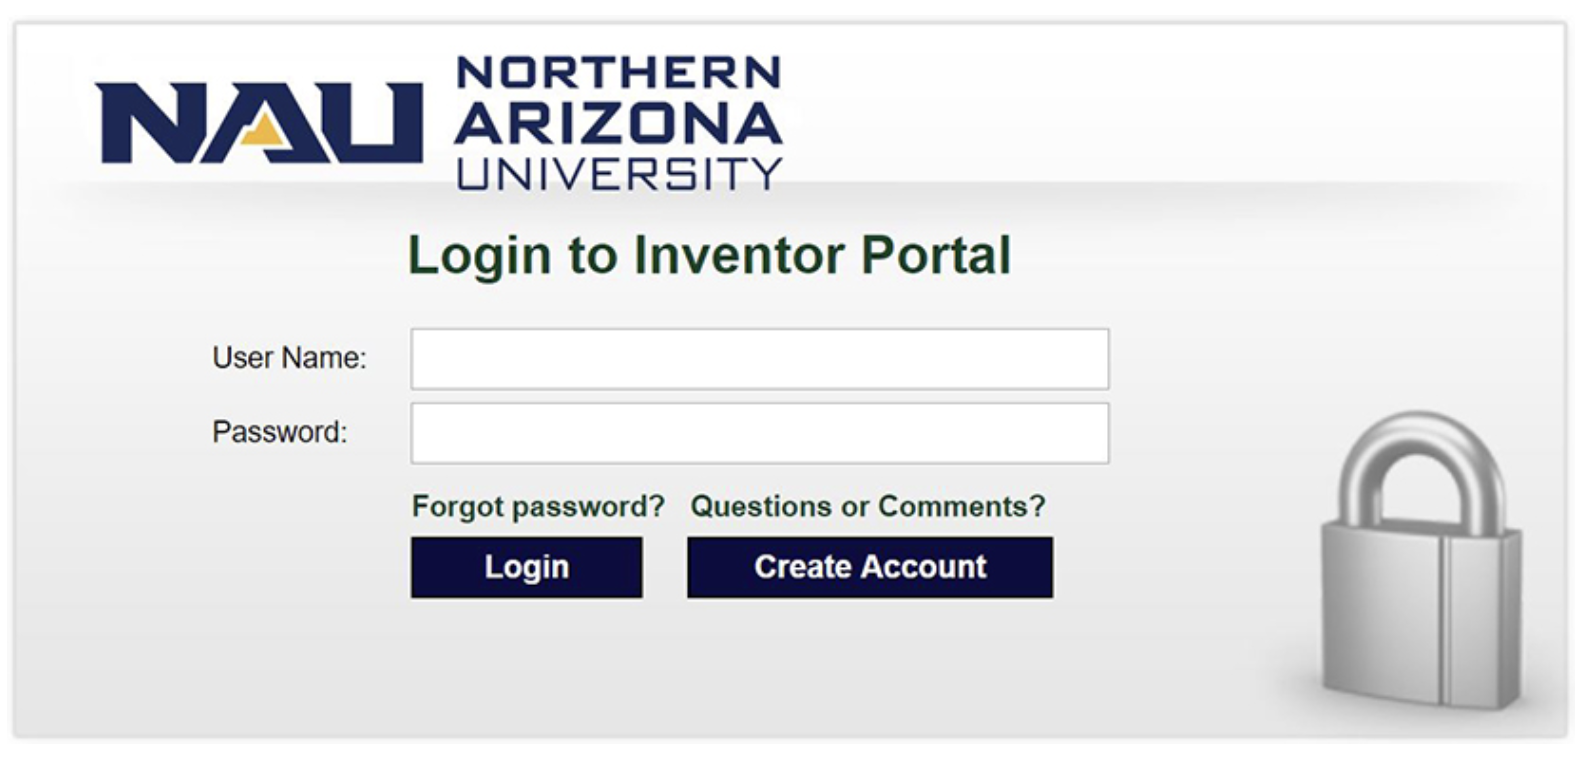 Inventor portal login screen